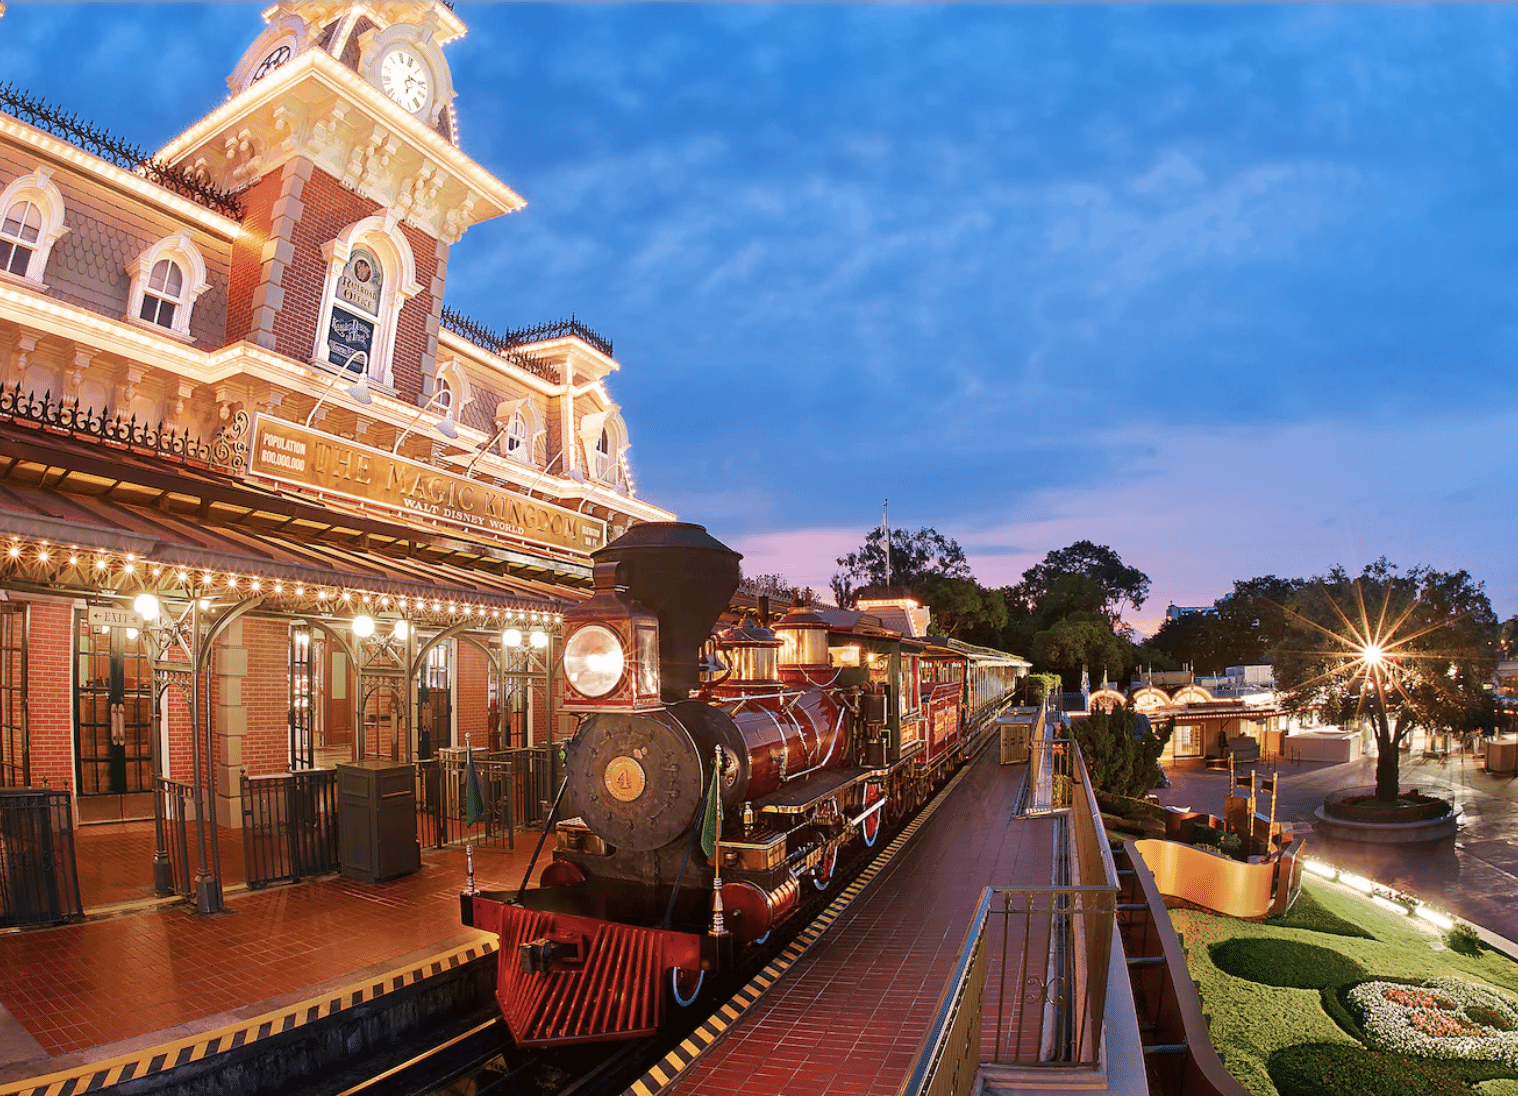 Walt Disney World Railroad - Magic Kingdom Attraction